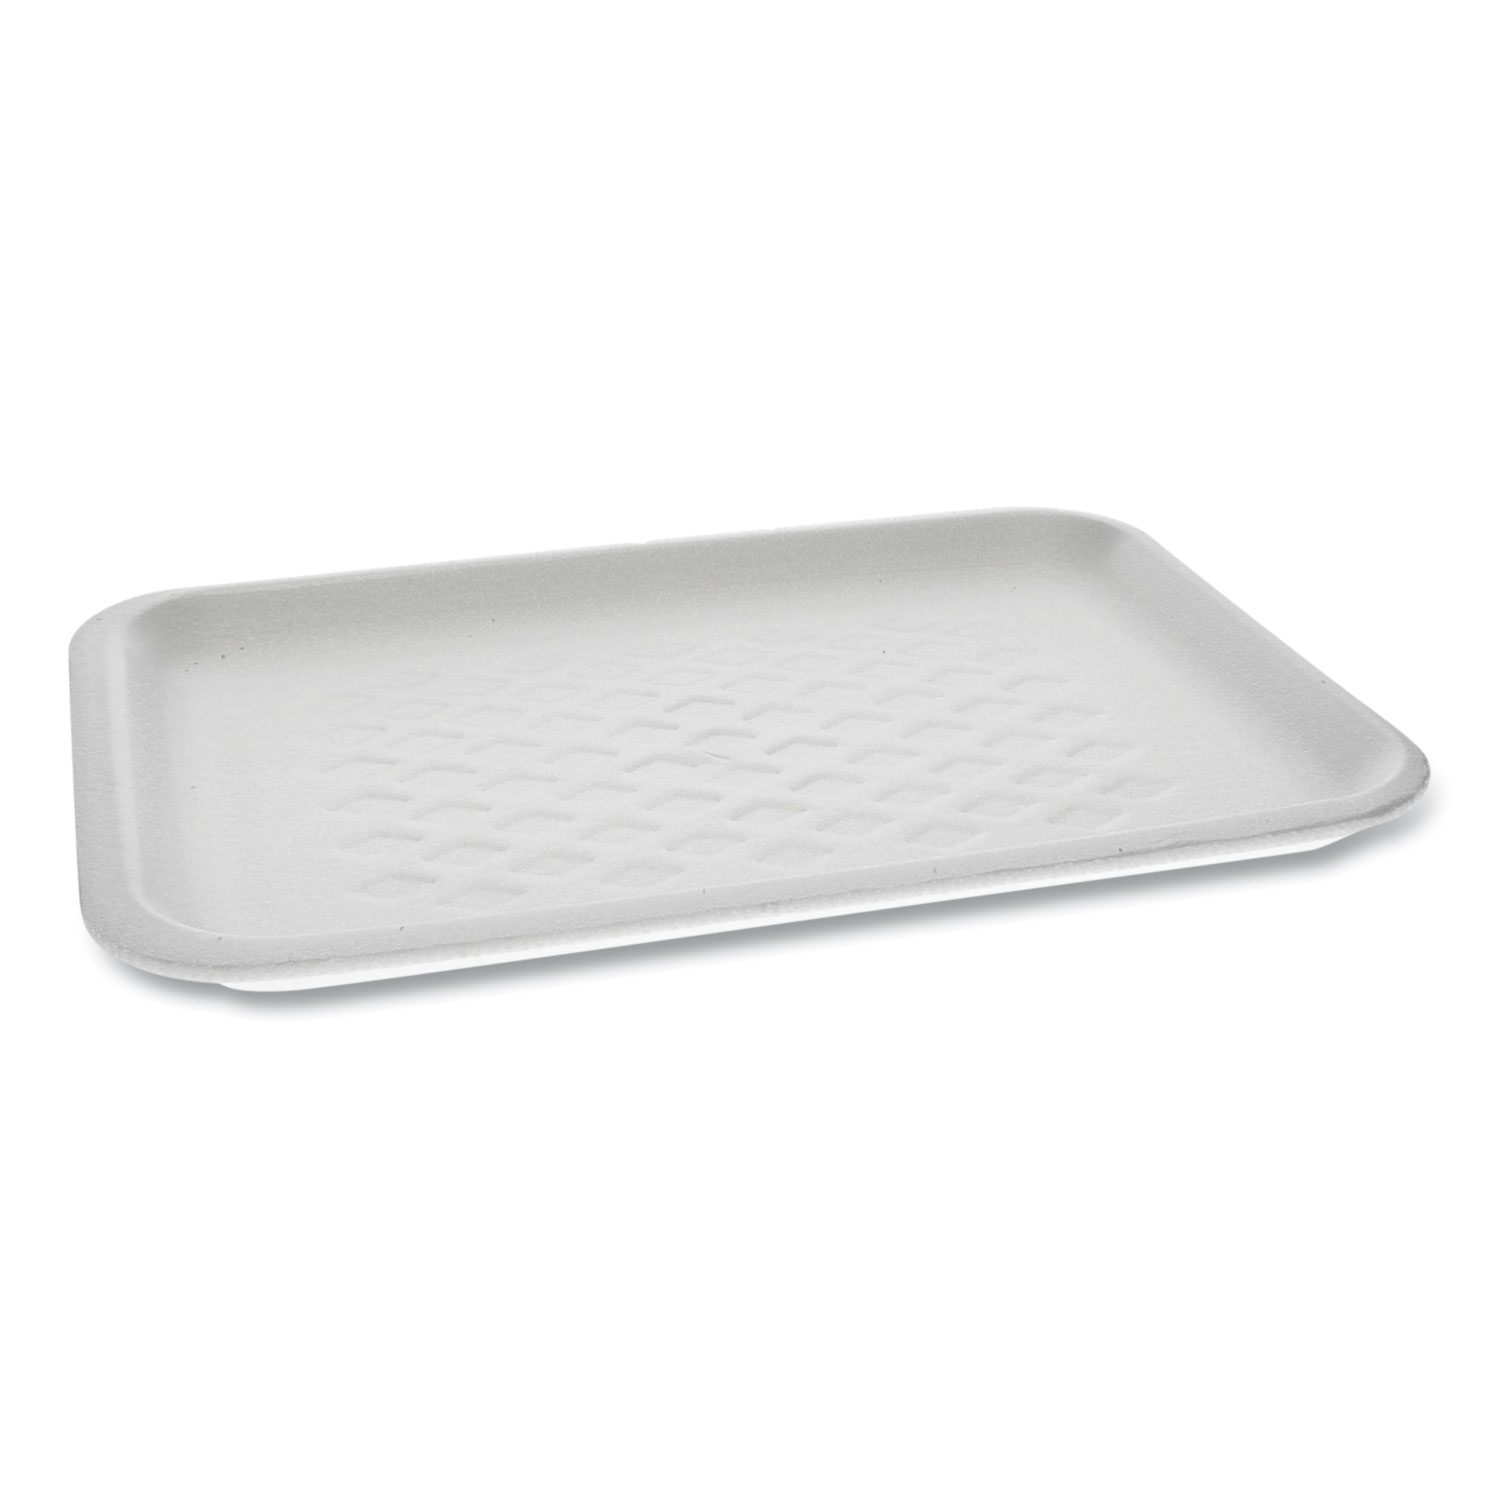 Pactiv Supermarket Tray, #2S, 10.75 x 5.5 x 1.2, White, 500/Carton